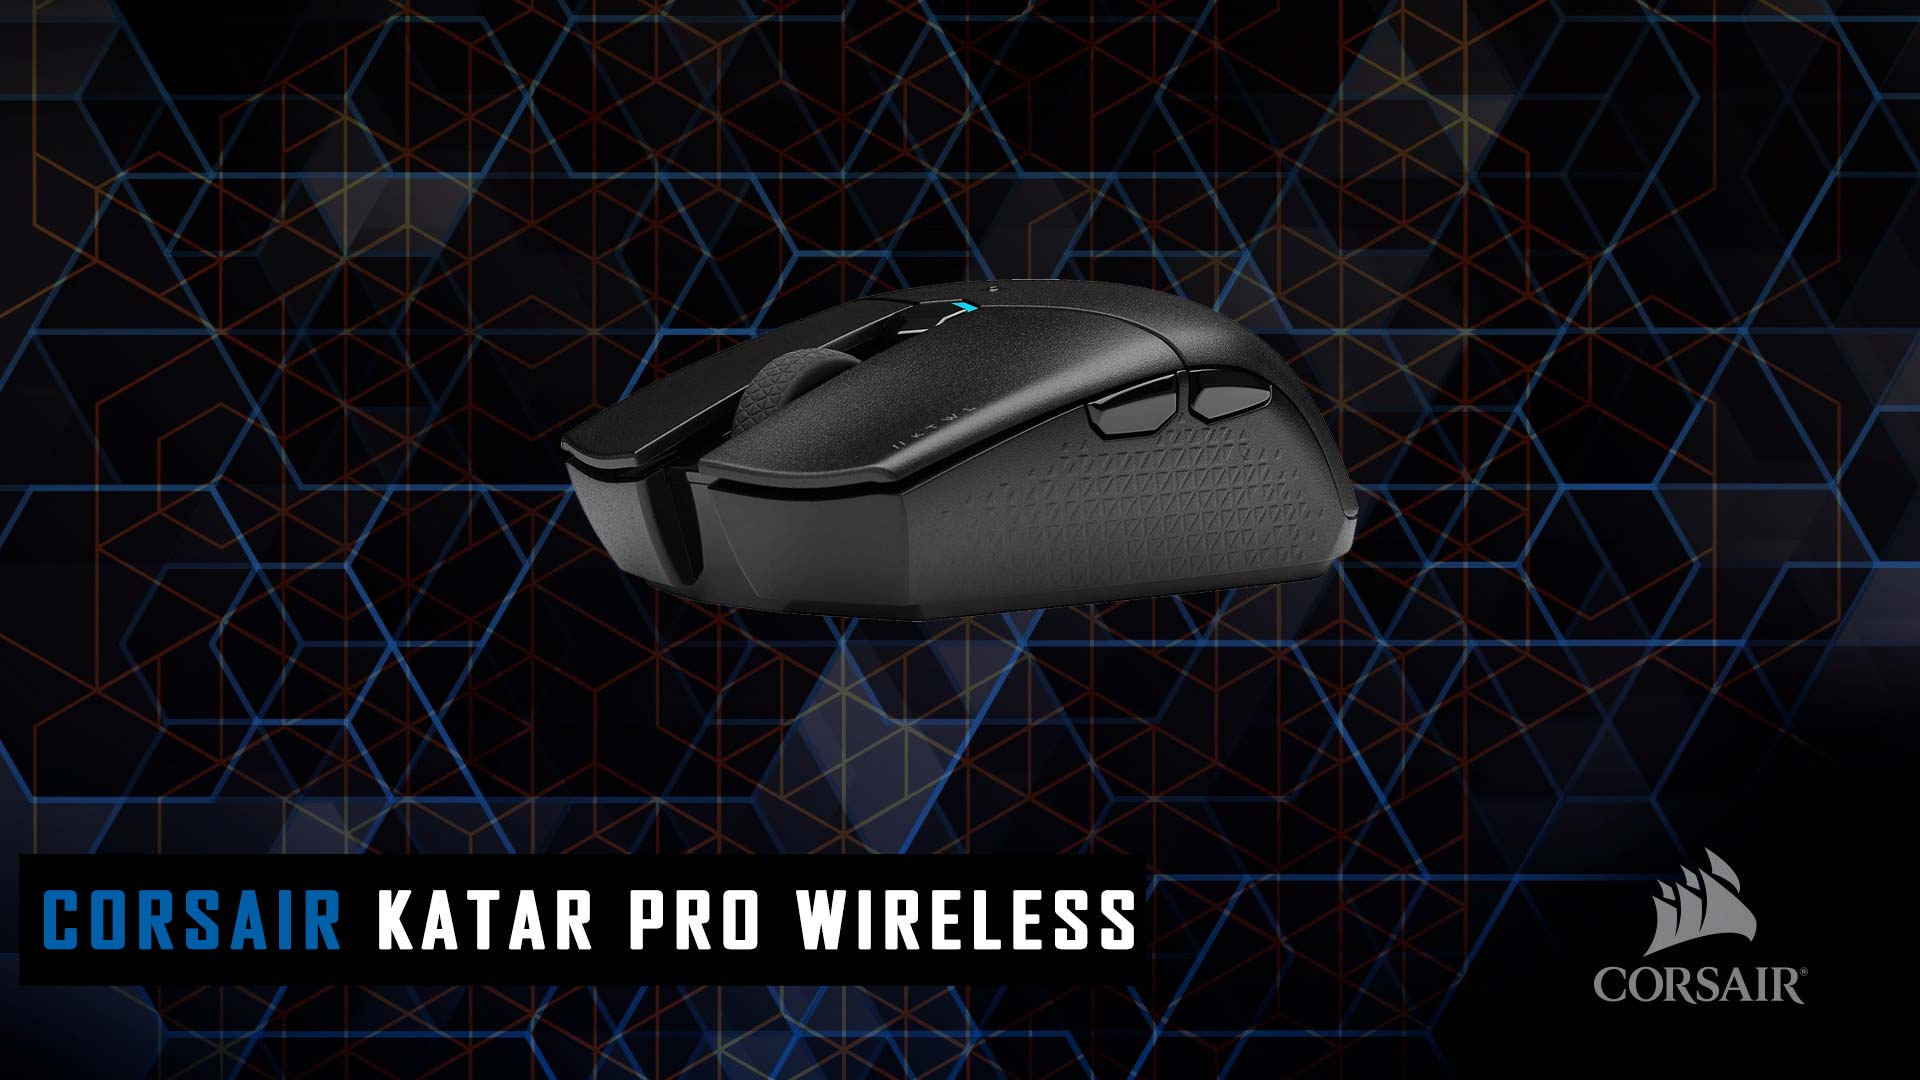 Corsair Katar Pro wireless recensione